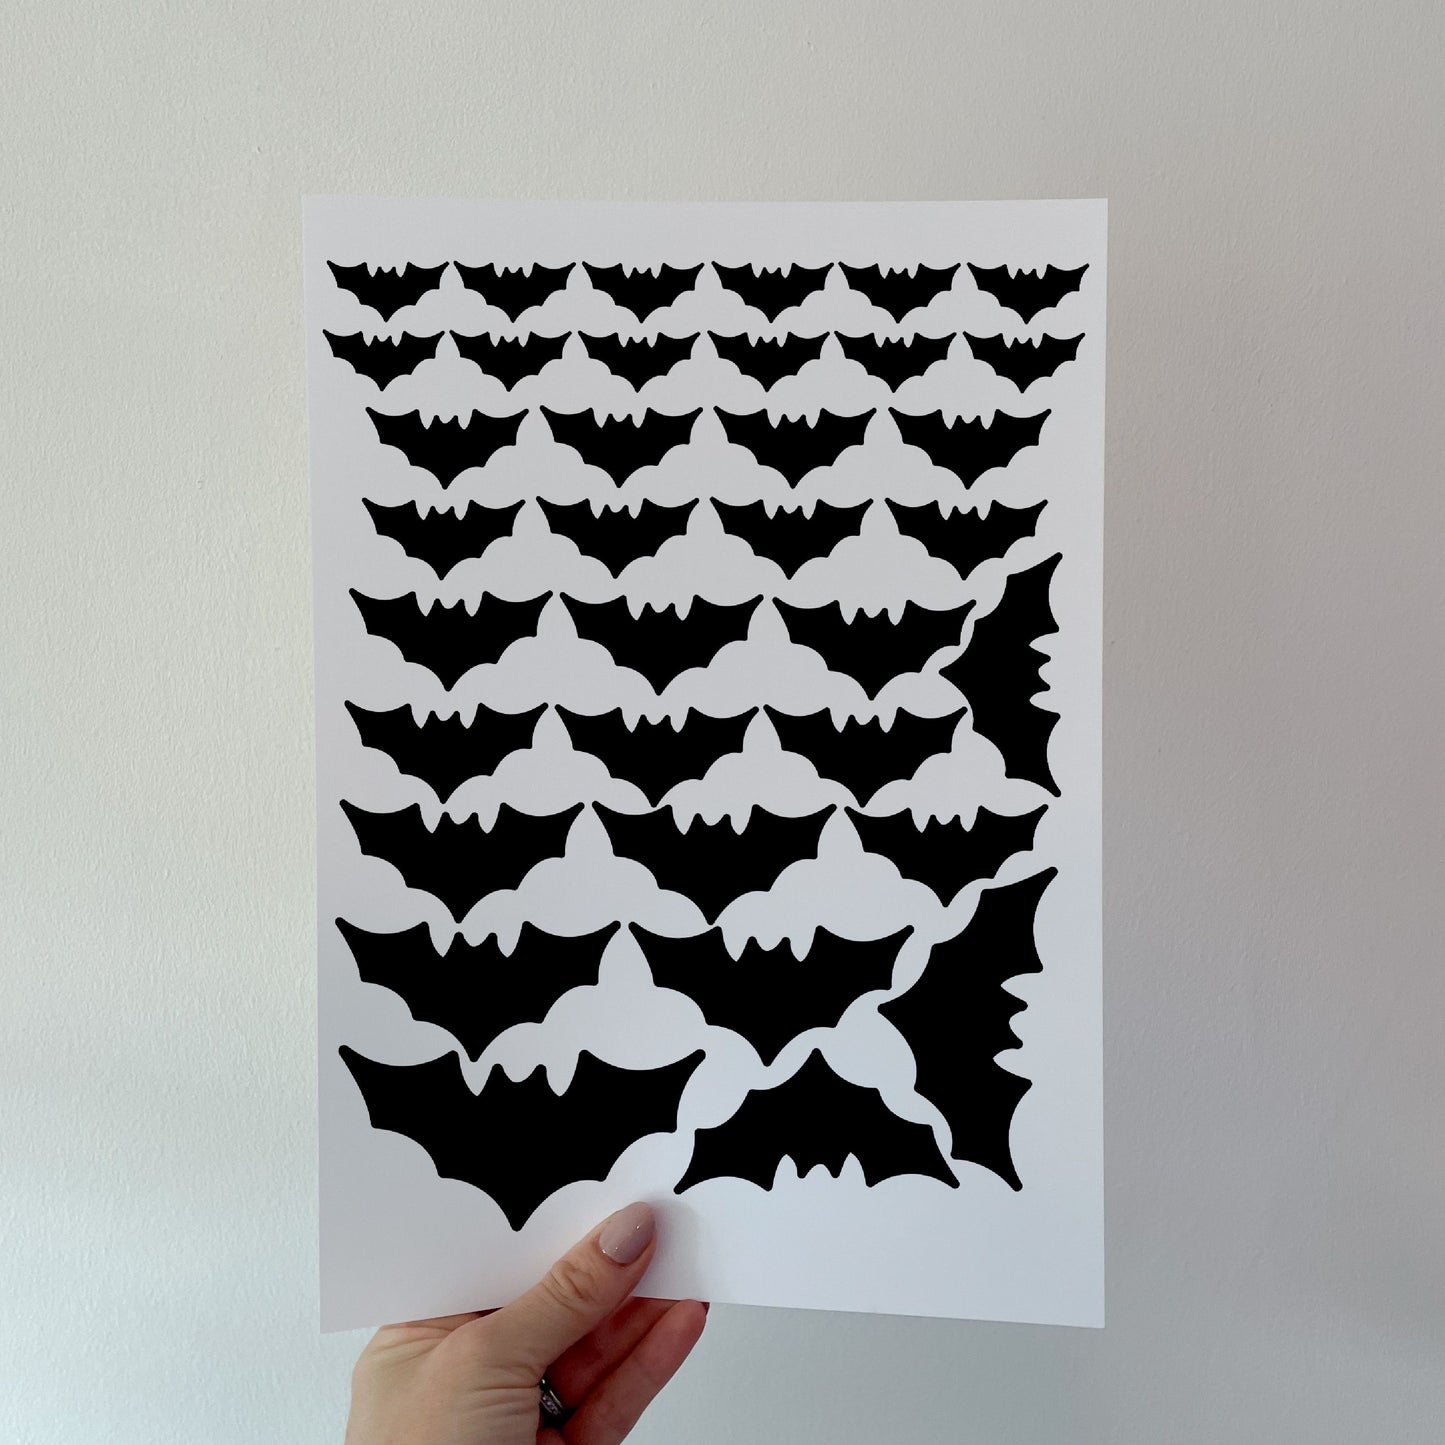 Value Wall Sticker Sheets - Bats